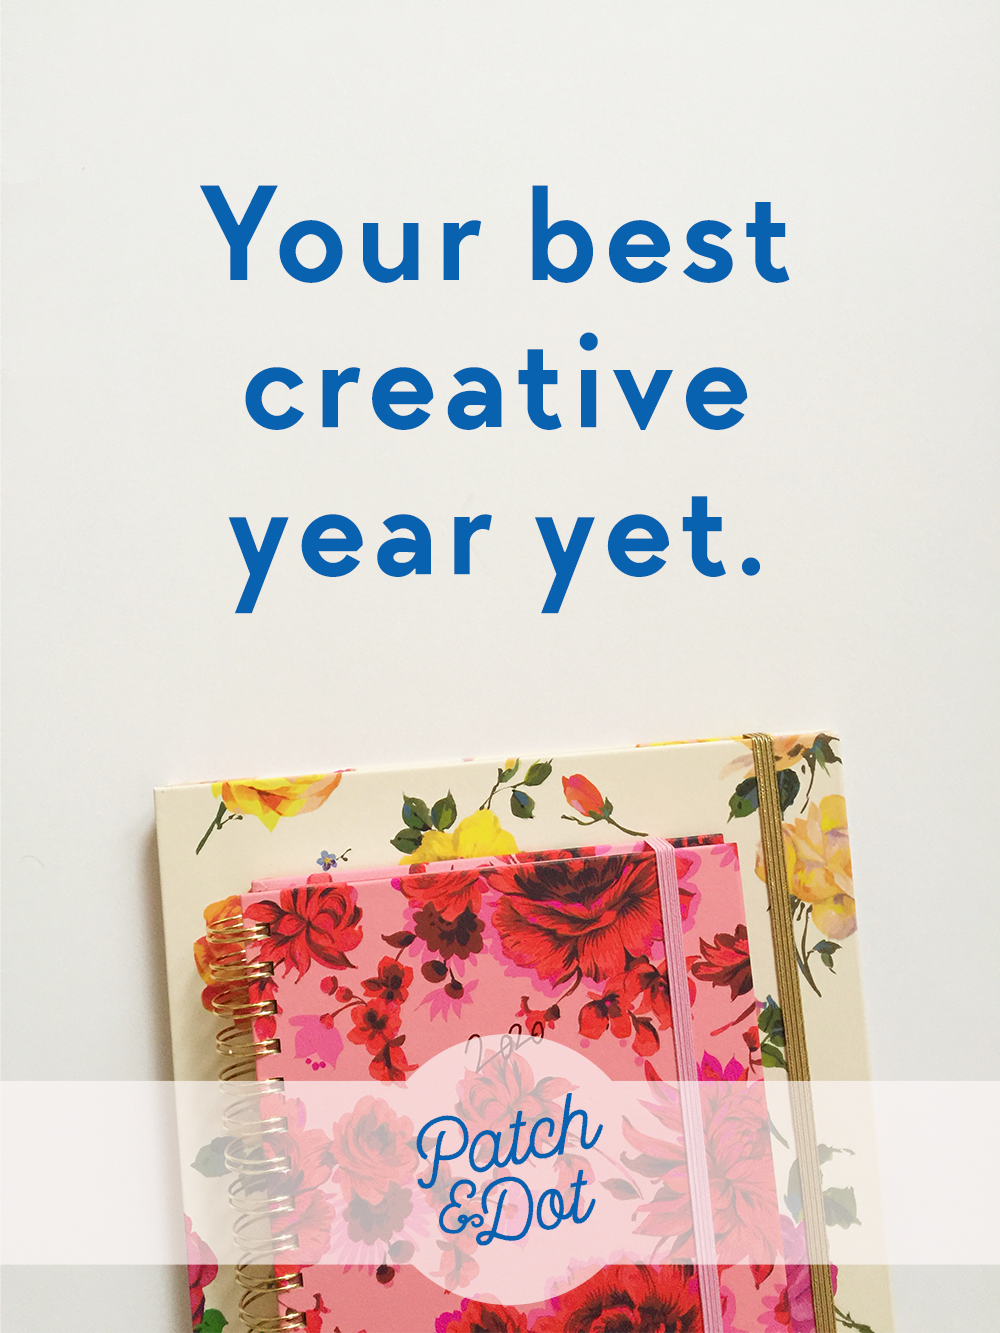 Plan your creative year